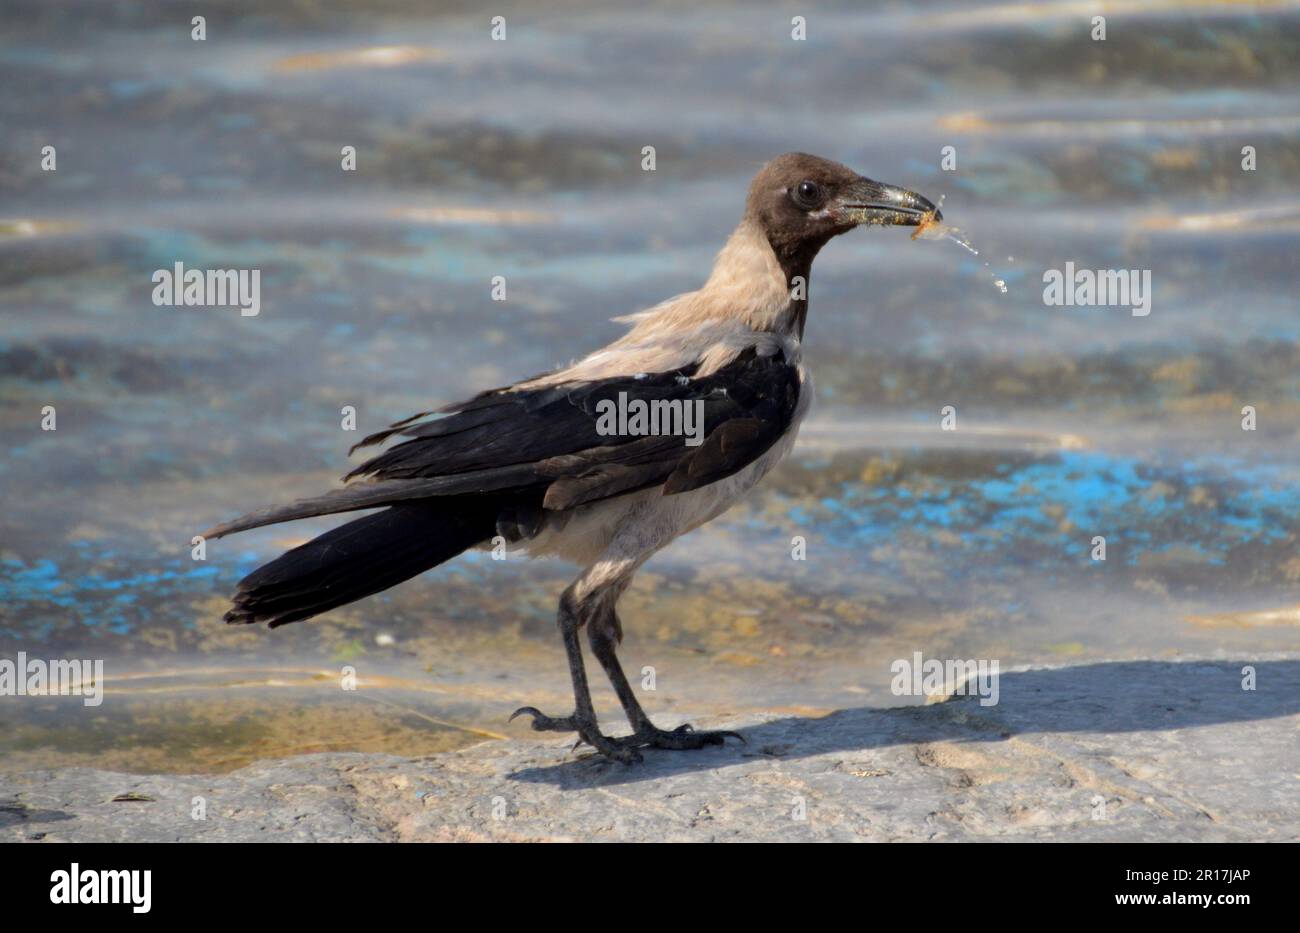 Iran, Isfahan: Hooded Crow (Corvus cornix Stock Photo - Alamy